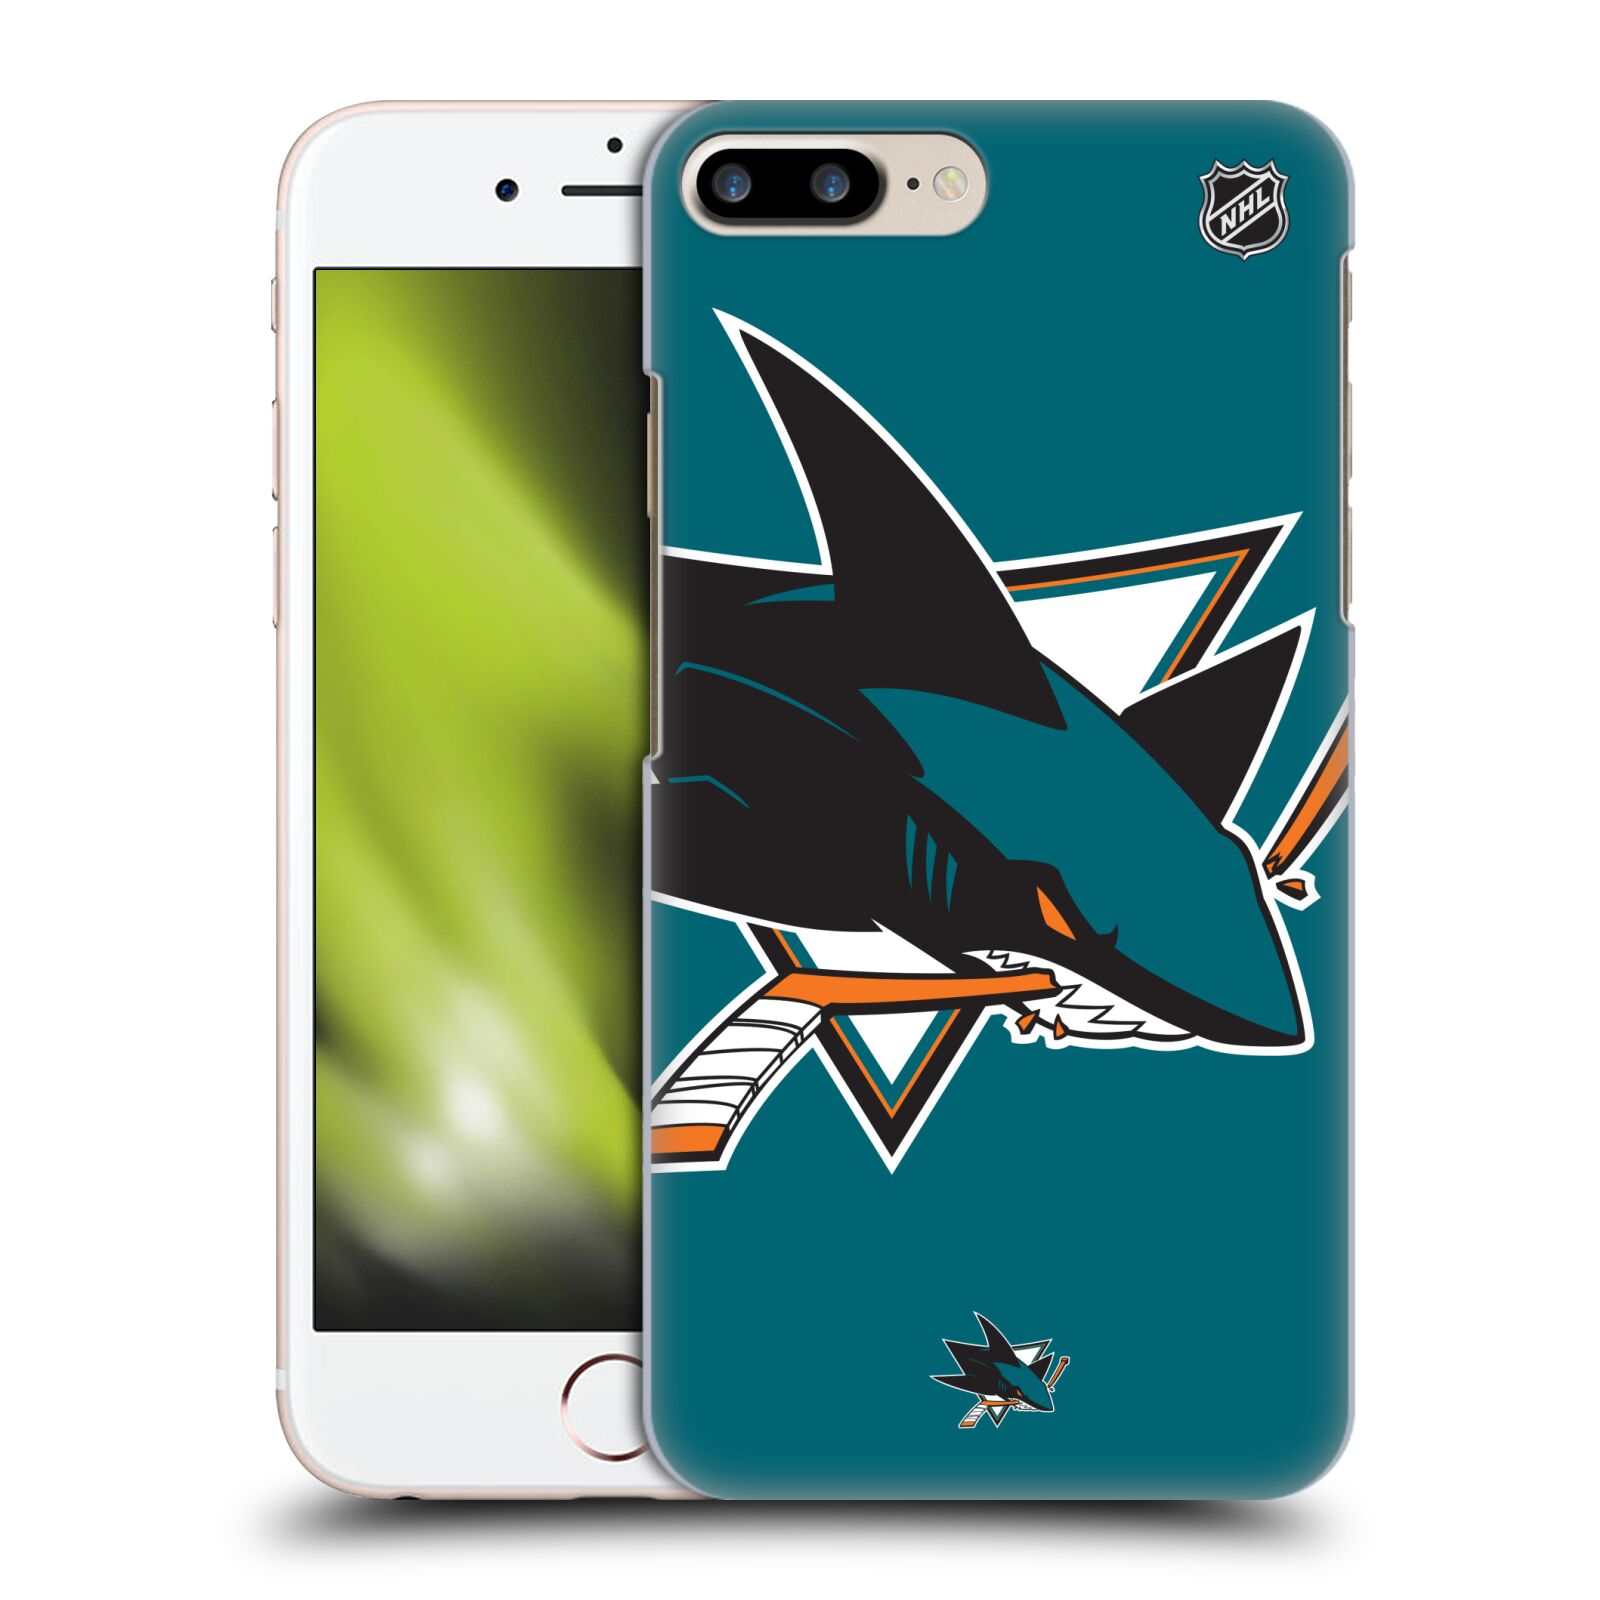 Pouzdro na mobil Apple Iphone 7/8 PLUS - HEAD CASE - Hokej NHL - San Jose Sharks - Velký znak